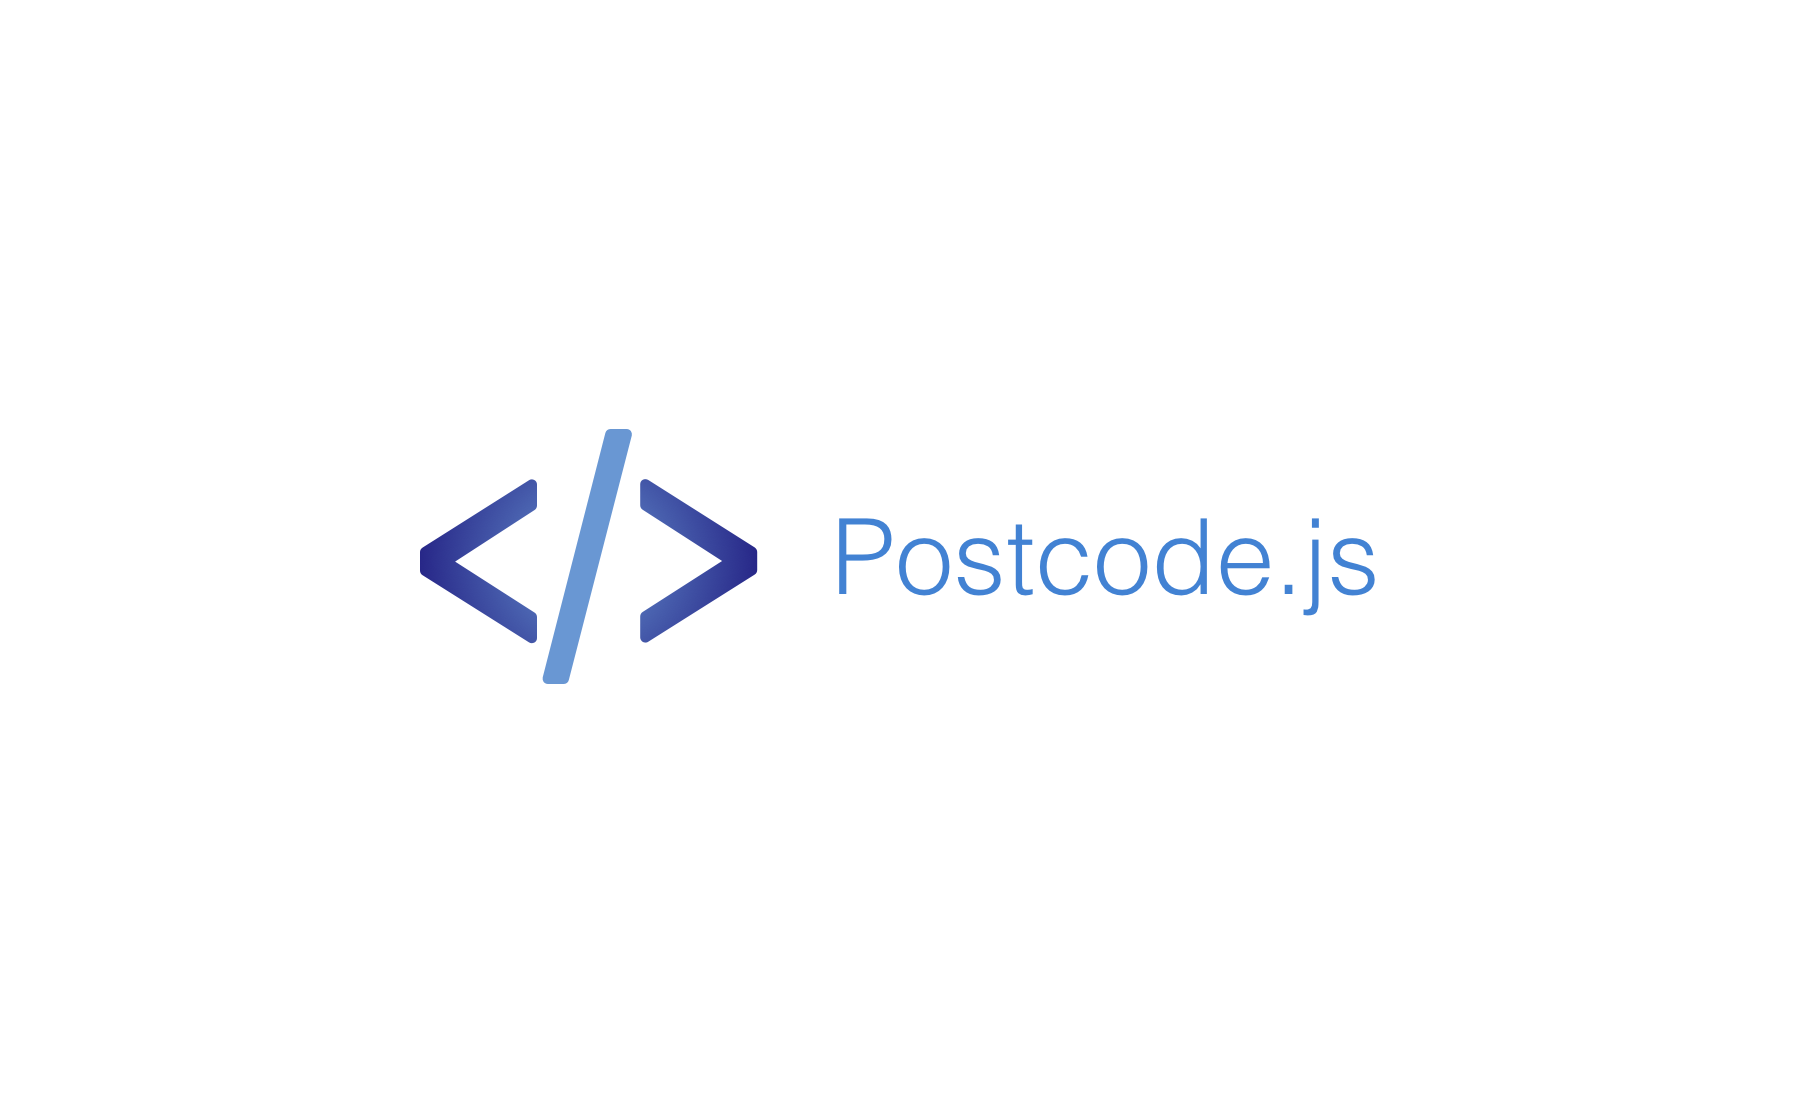 Postcode.js